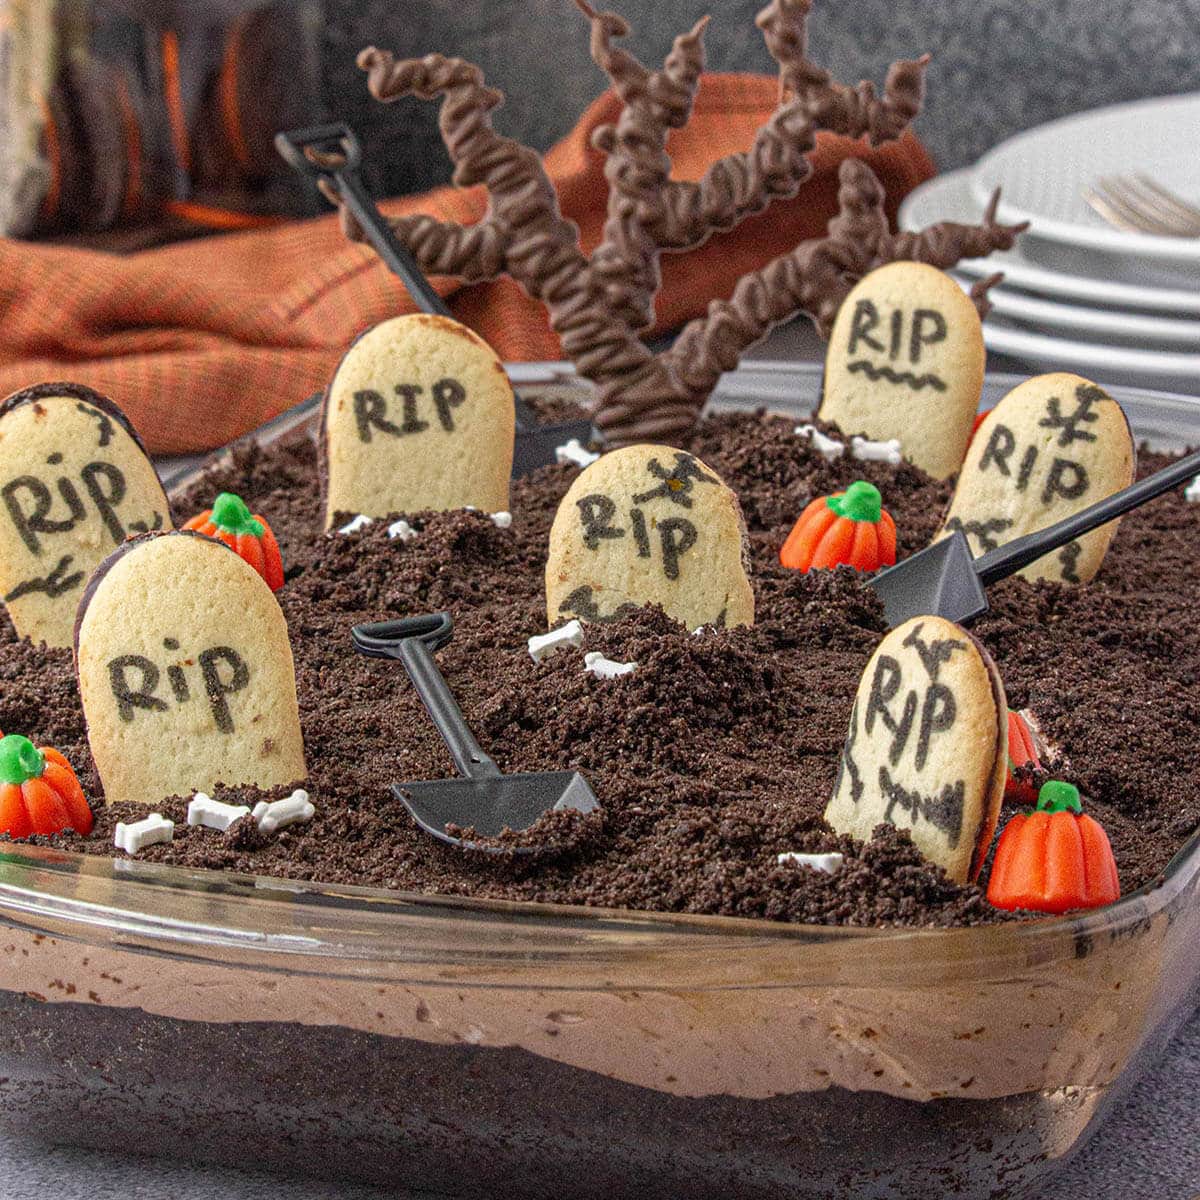 Fun Graveyard Dirt Cake decorated for Halloween.